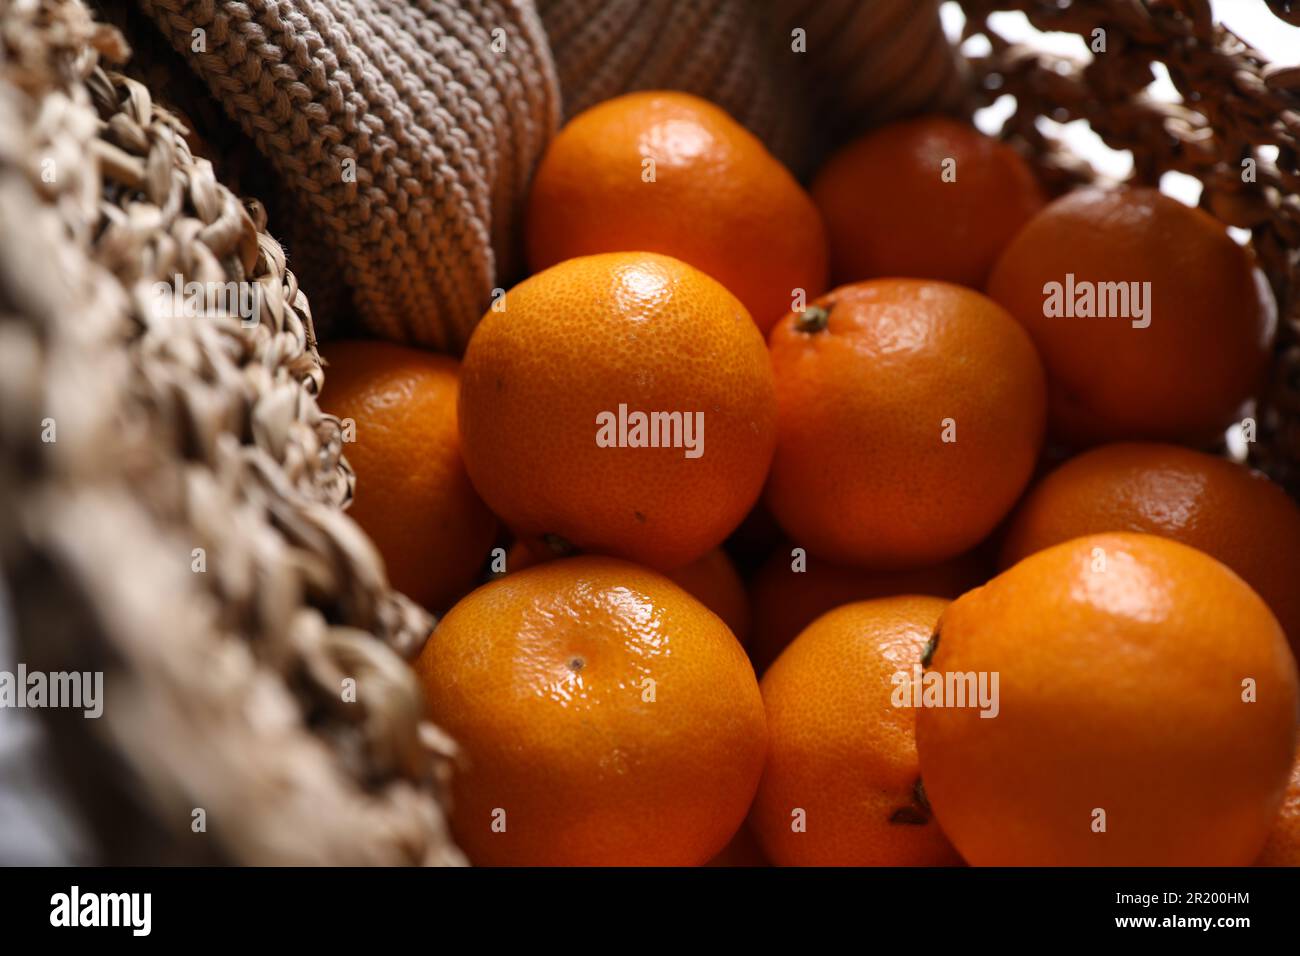 Net bag with many fresh ripe tangerines, closeup Stock Photo - Alamy